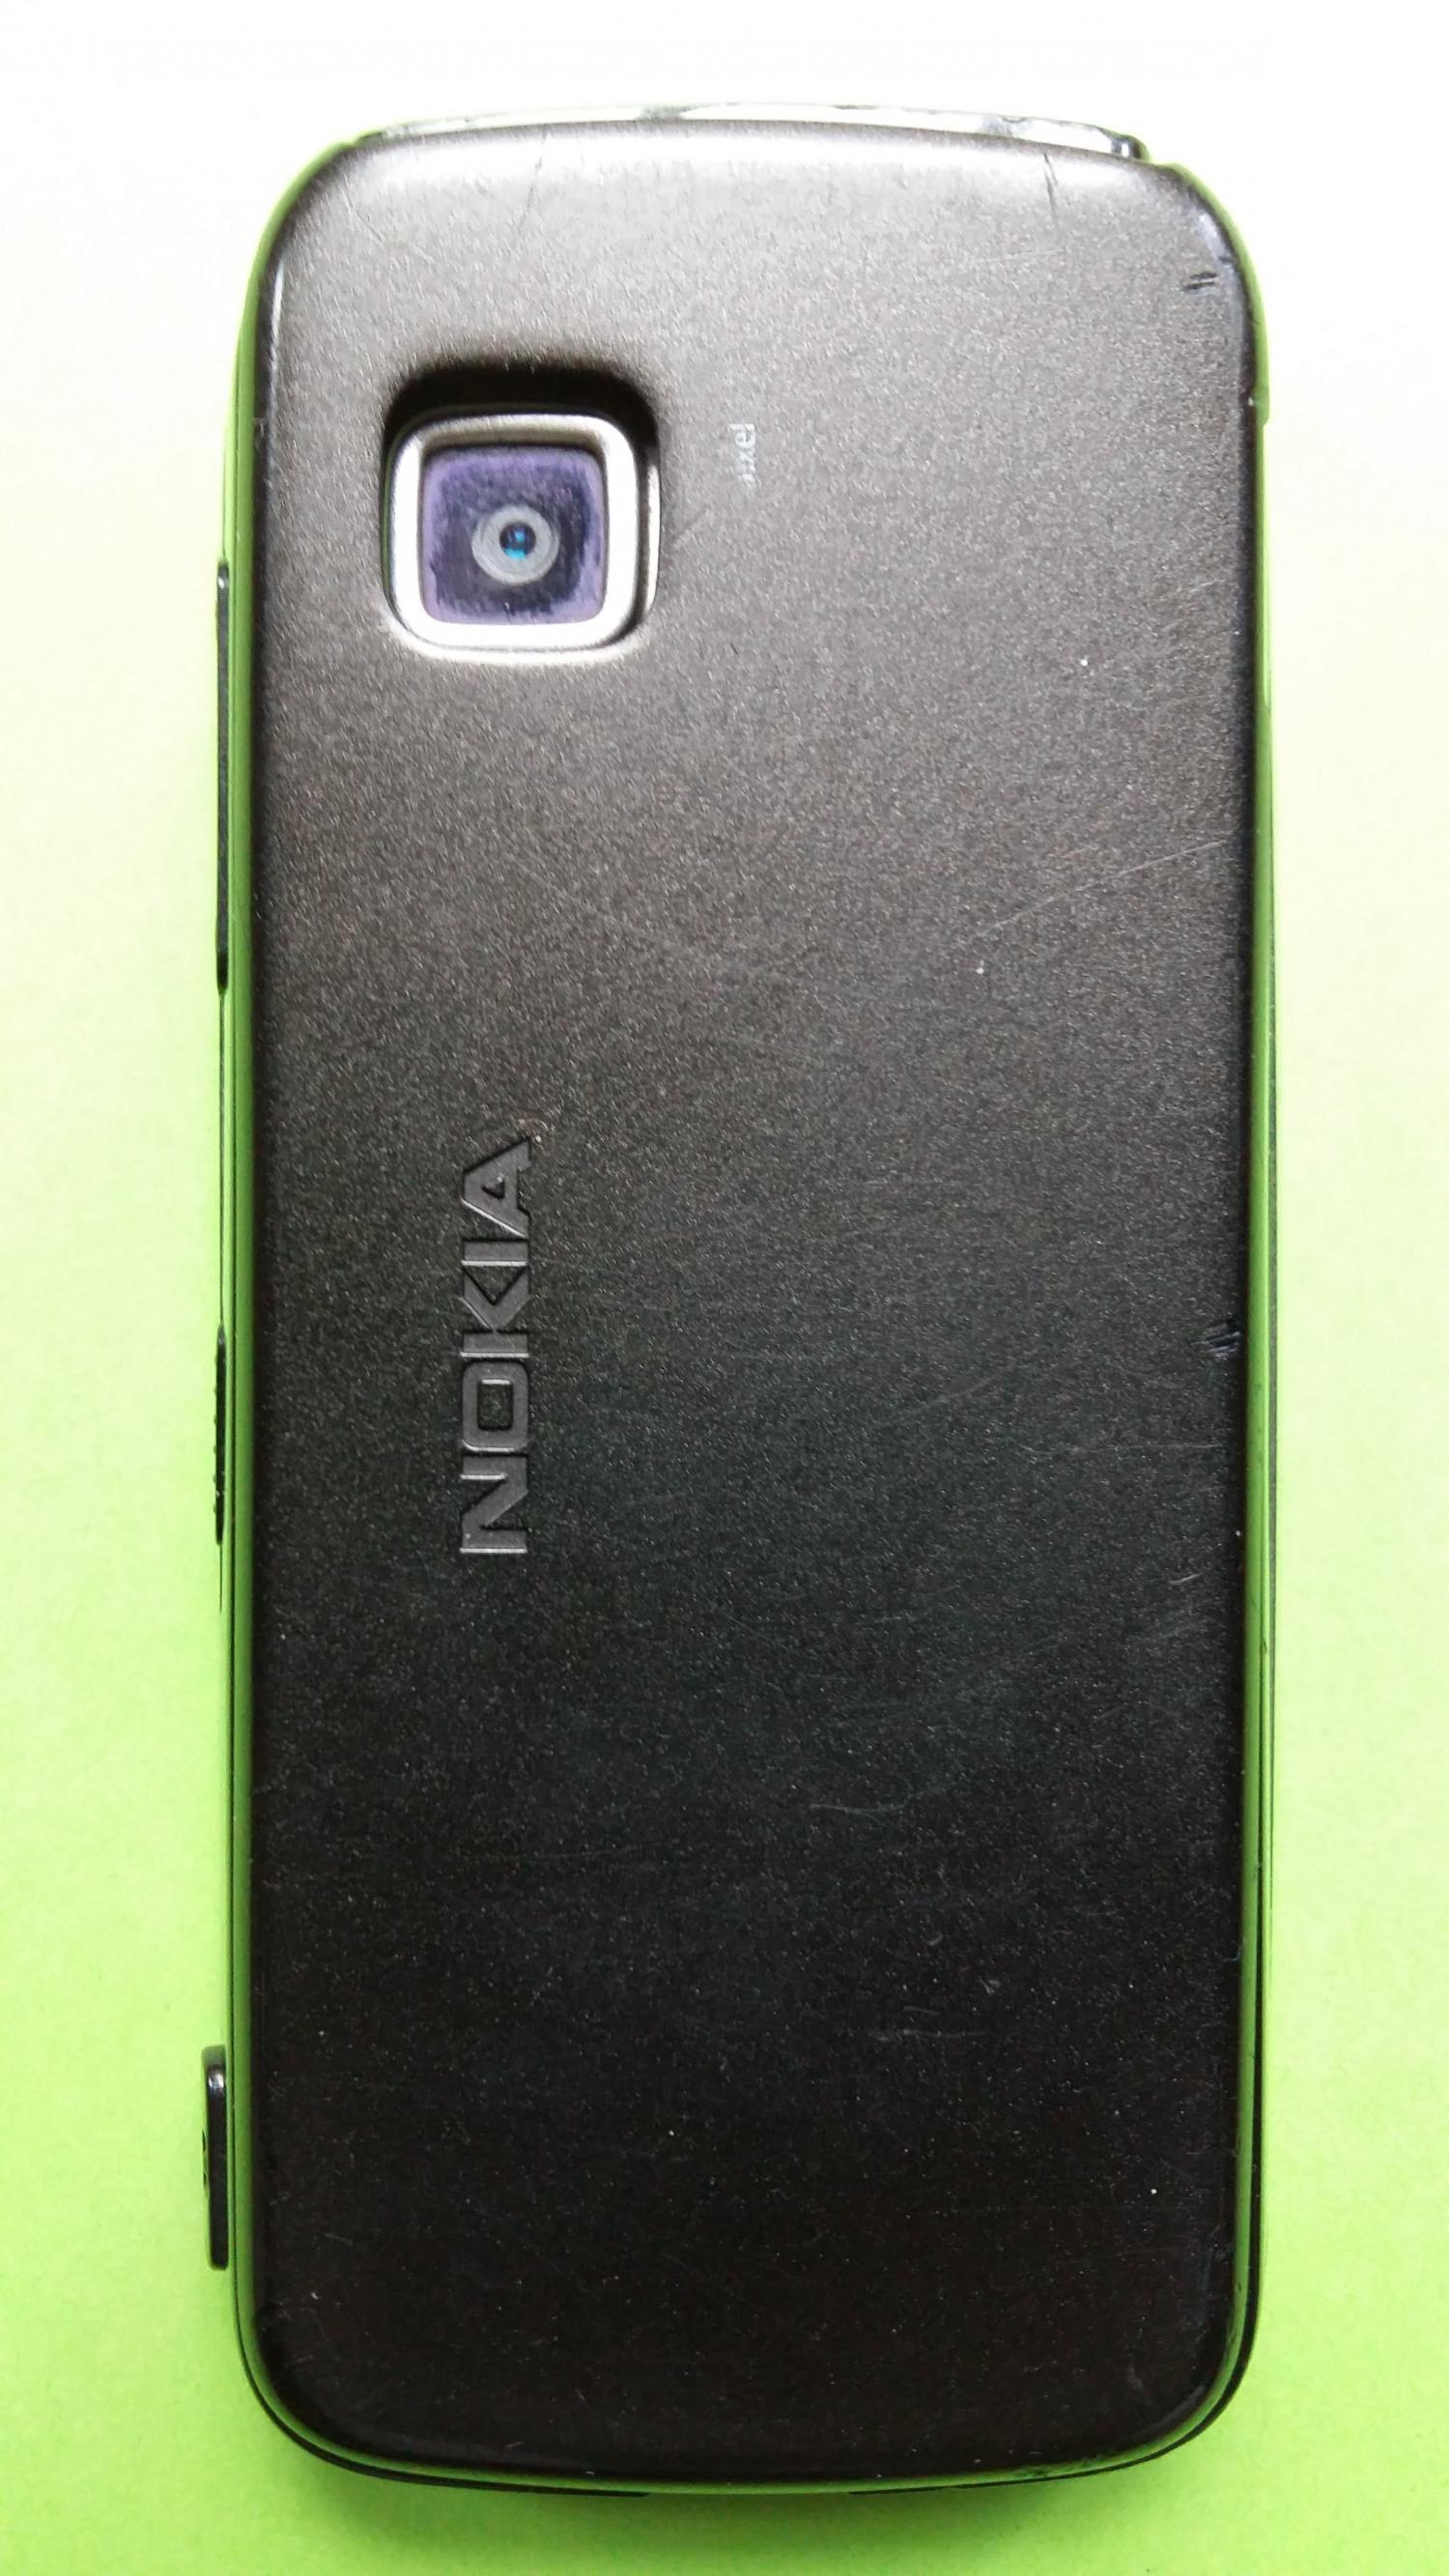 image-7301572-Nokia 5230 Nuron (1)2.jpg